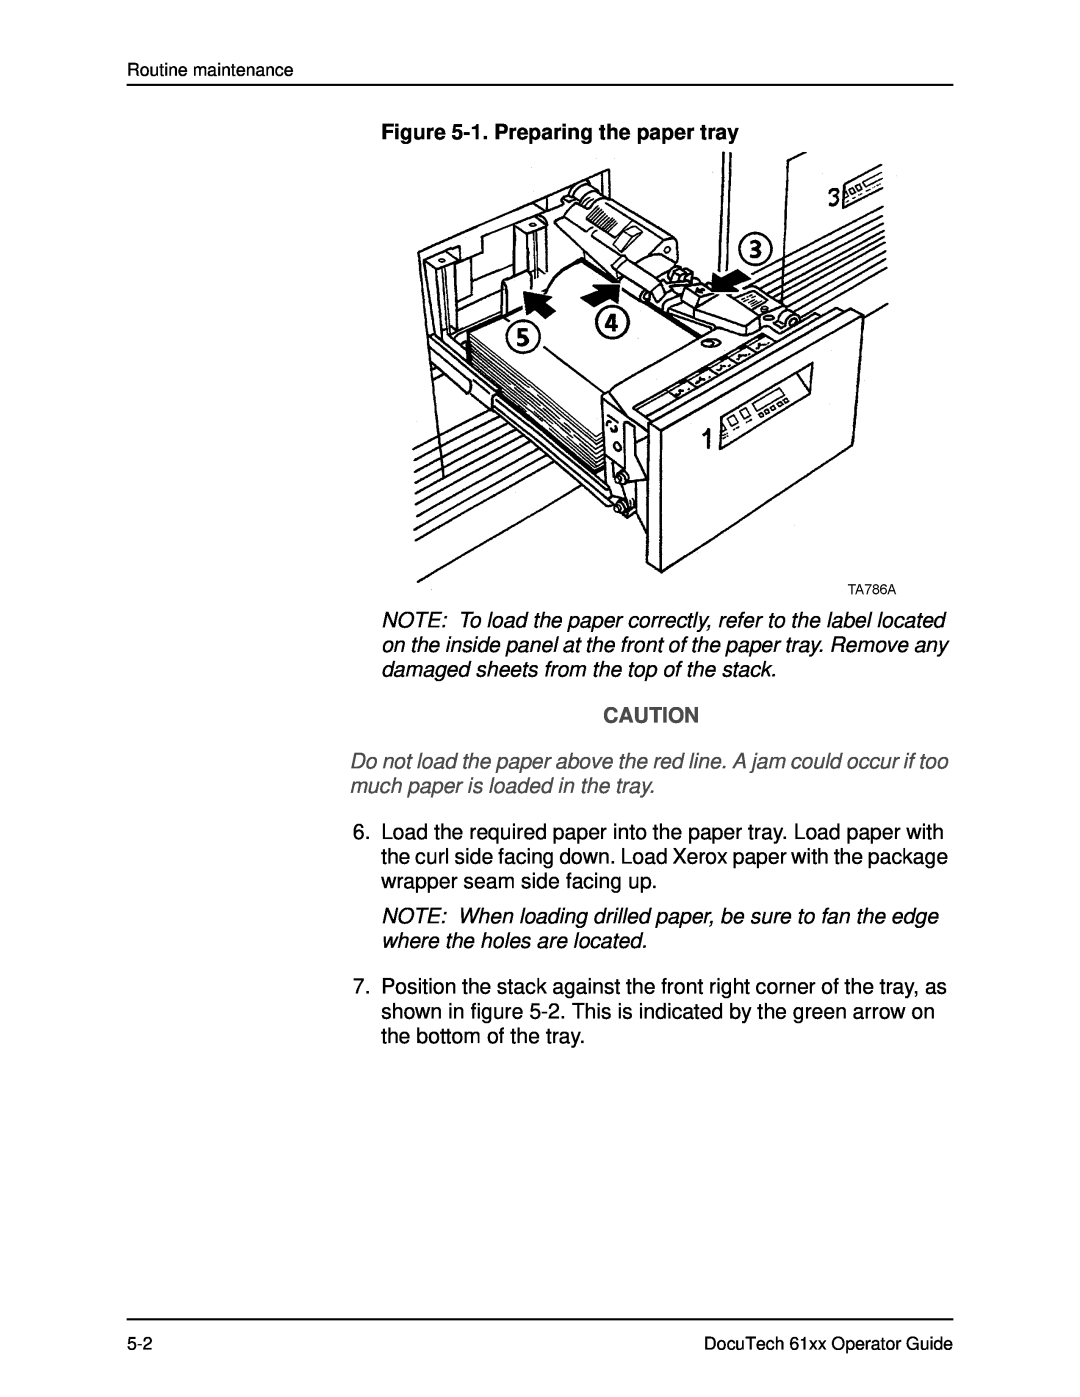 Xerox 61xx manual 1. Preparing the paper tray 